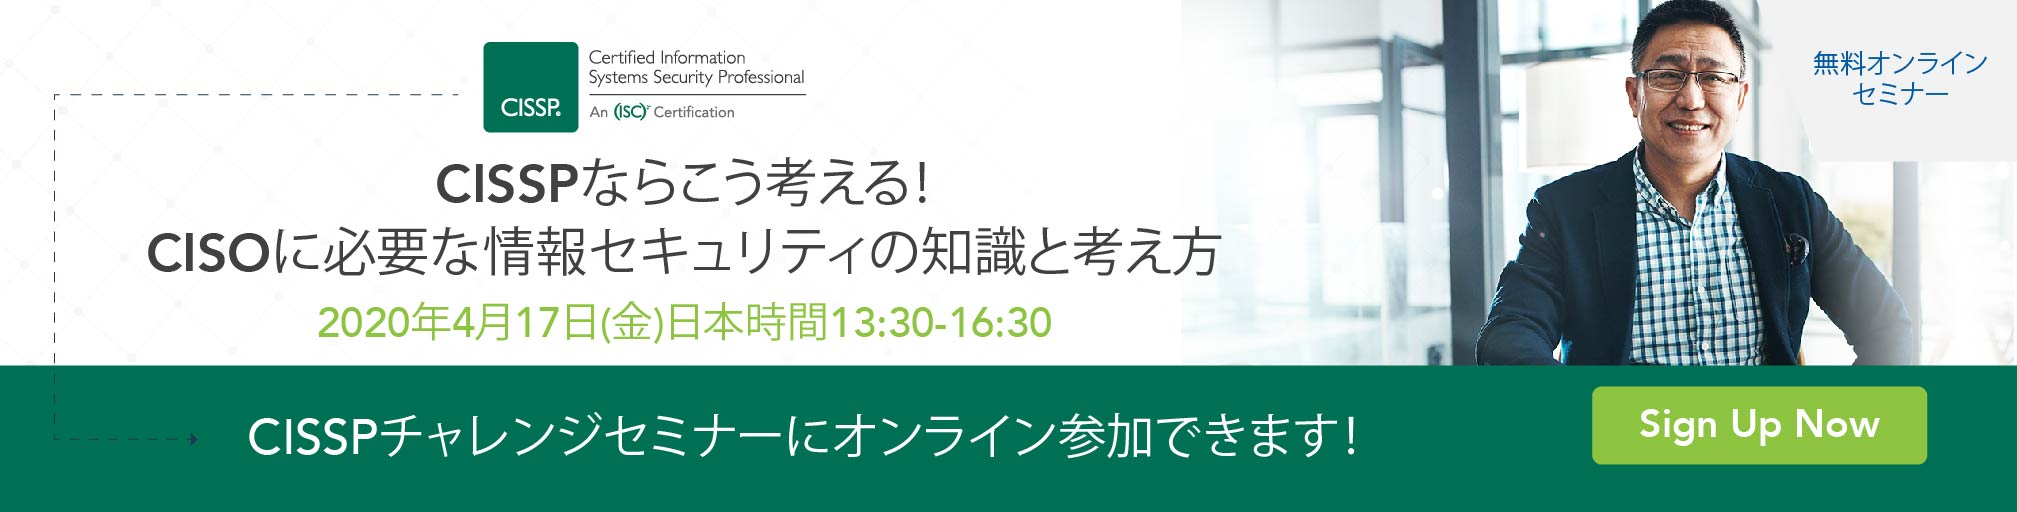 APAC-Japan-CISSP-Info-Session-Banners_0402_H_968X245